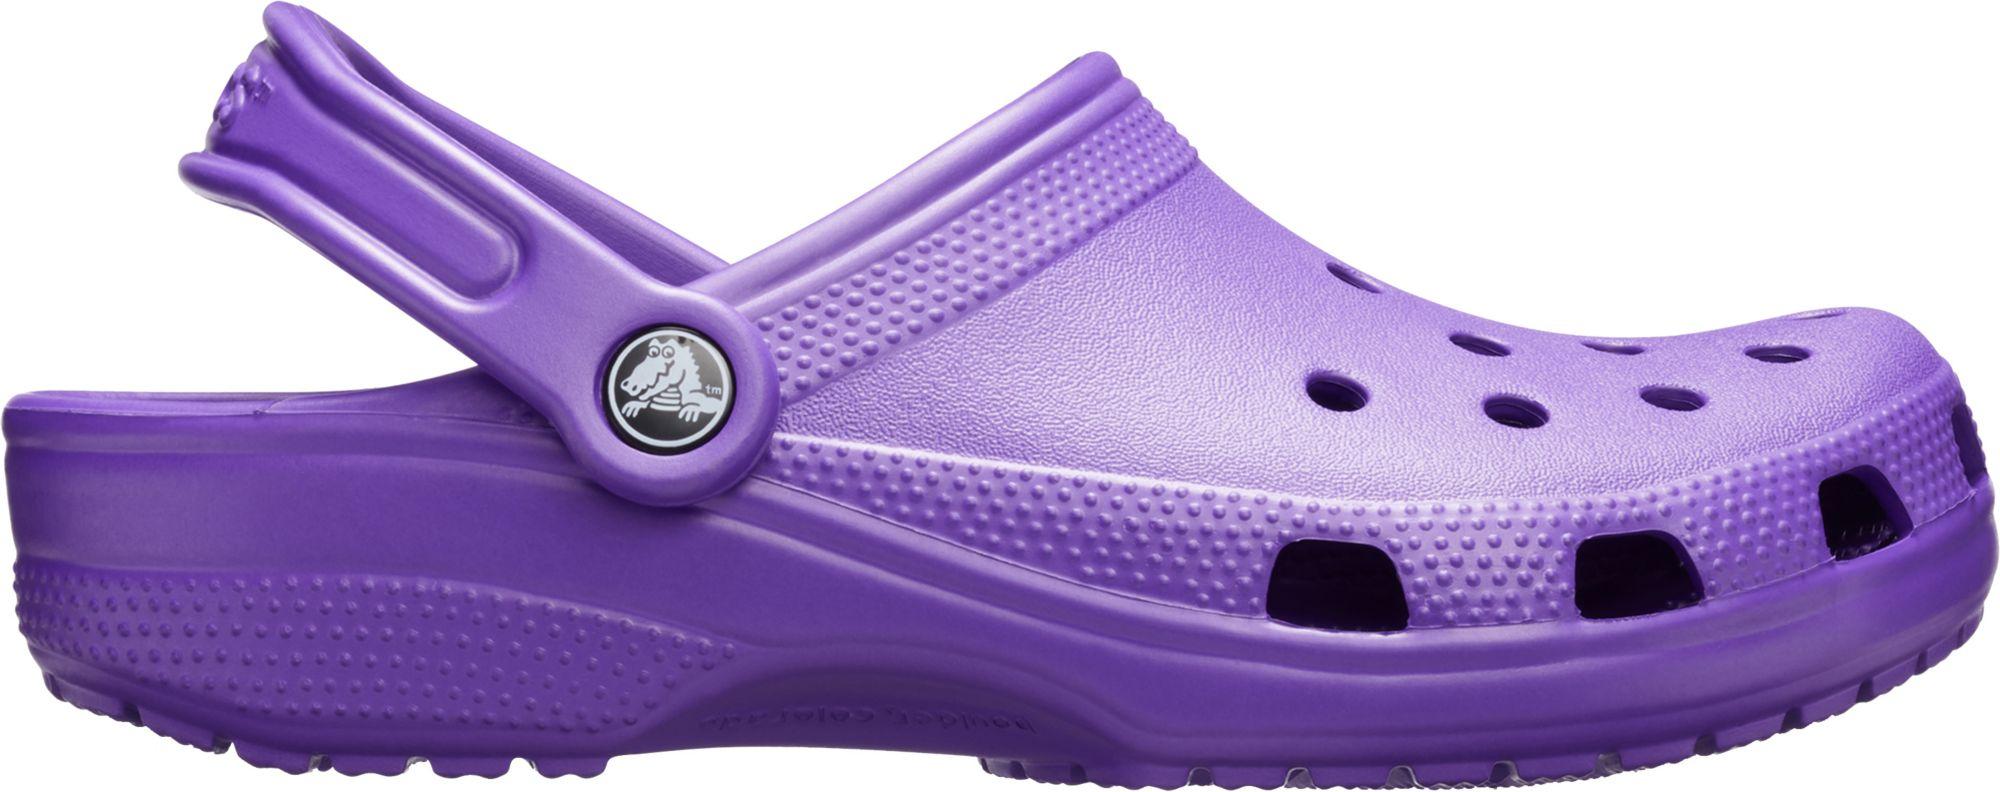 Crocs™ Adult Original Classic Clogs in Neon Purple (Purple) - Lyst